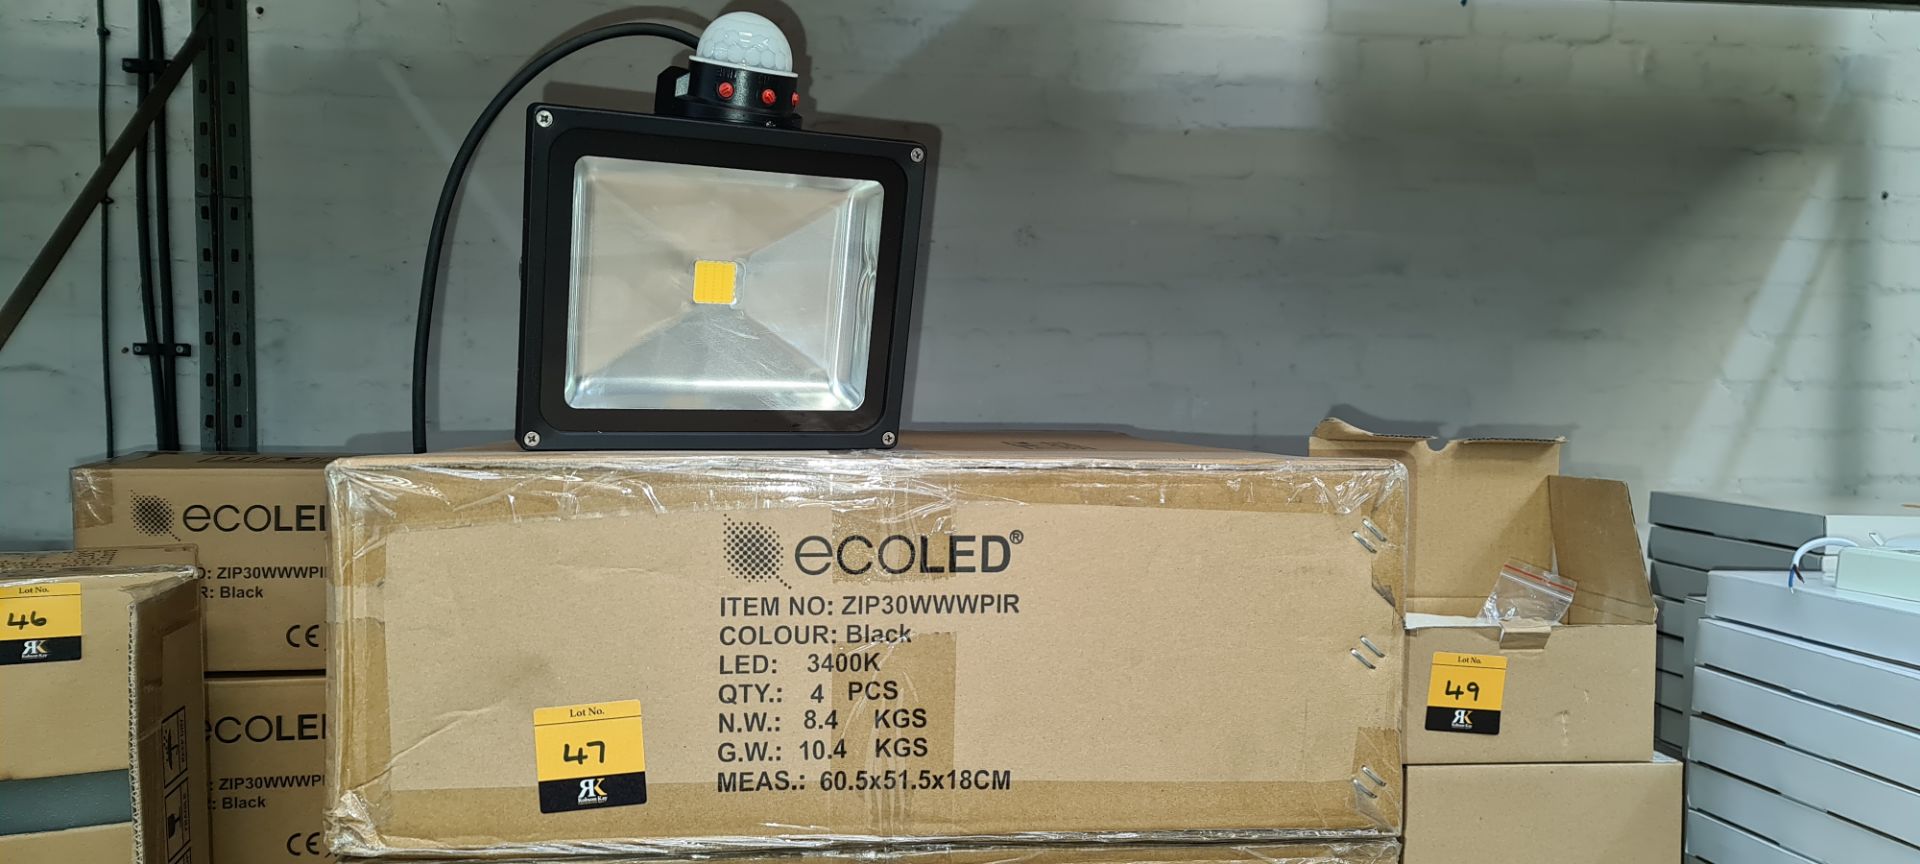 4 off EcoLED floodlights with built-in sensors. Item ZIP30WWWPIR, 36W LED PIR floodlights - Image 5 of 10